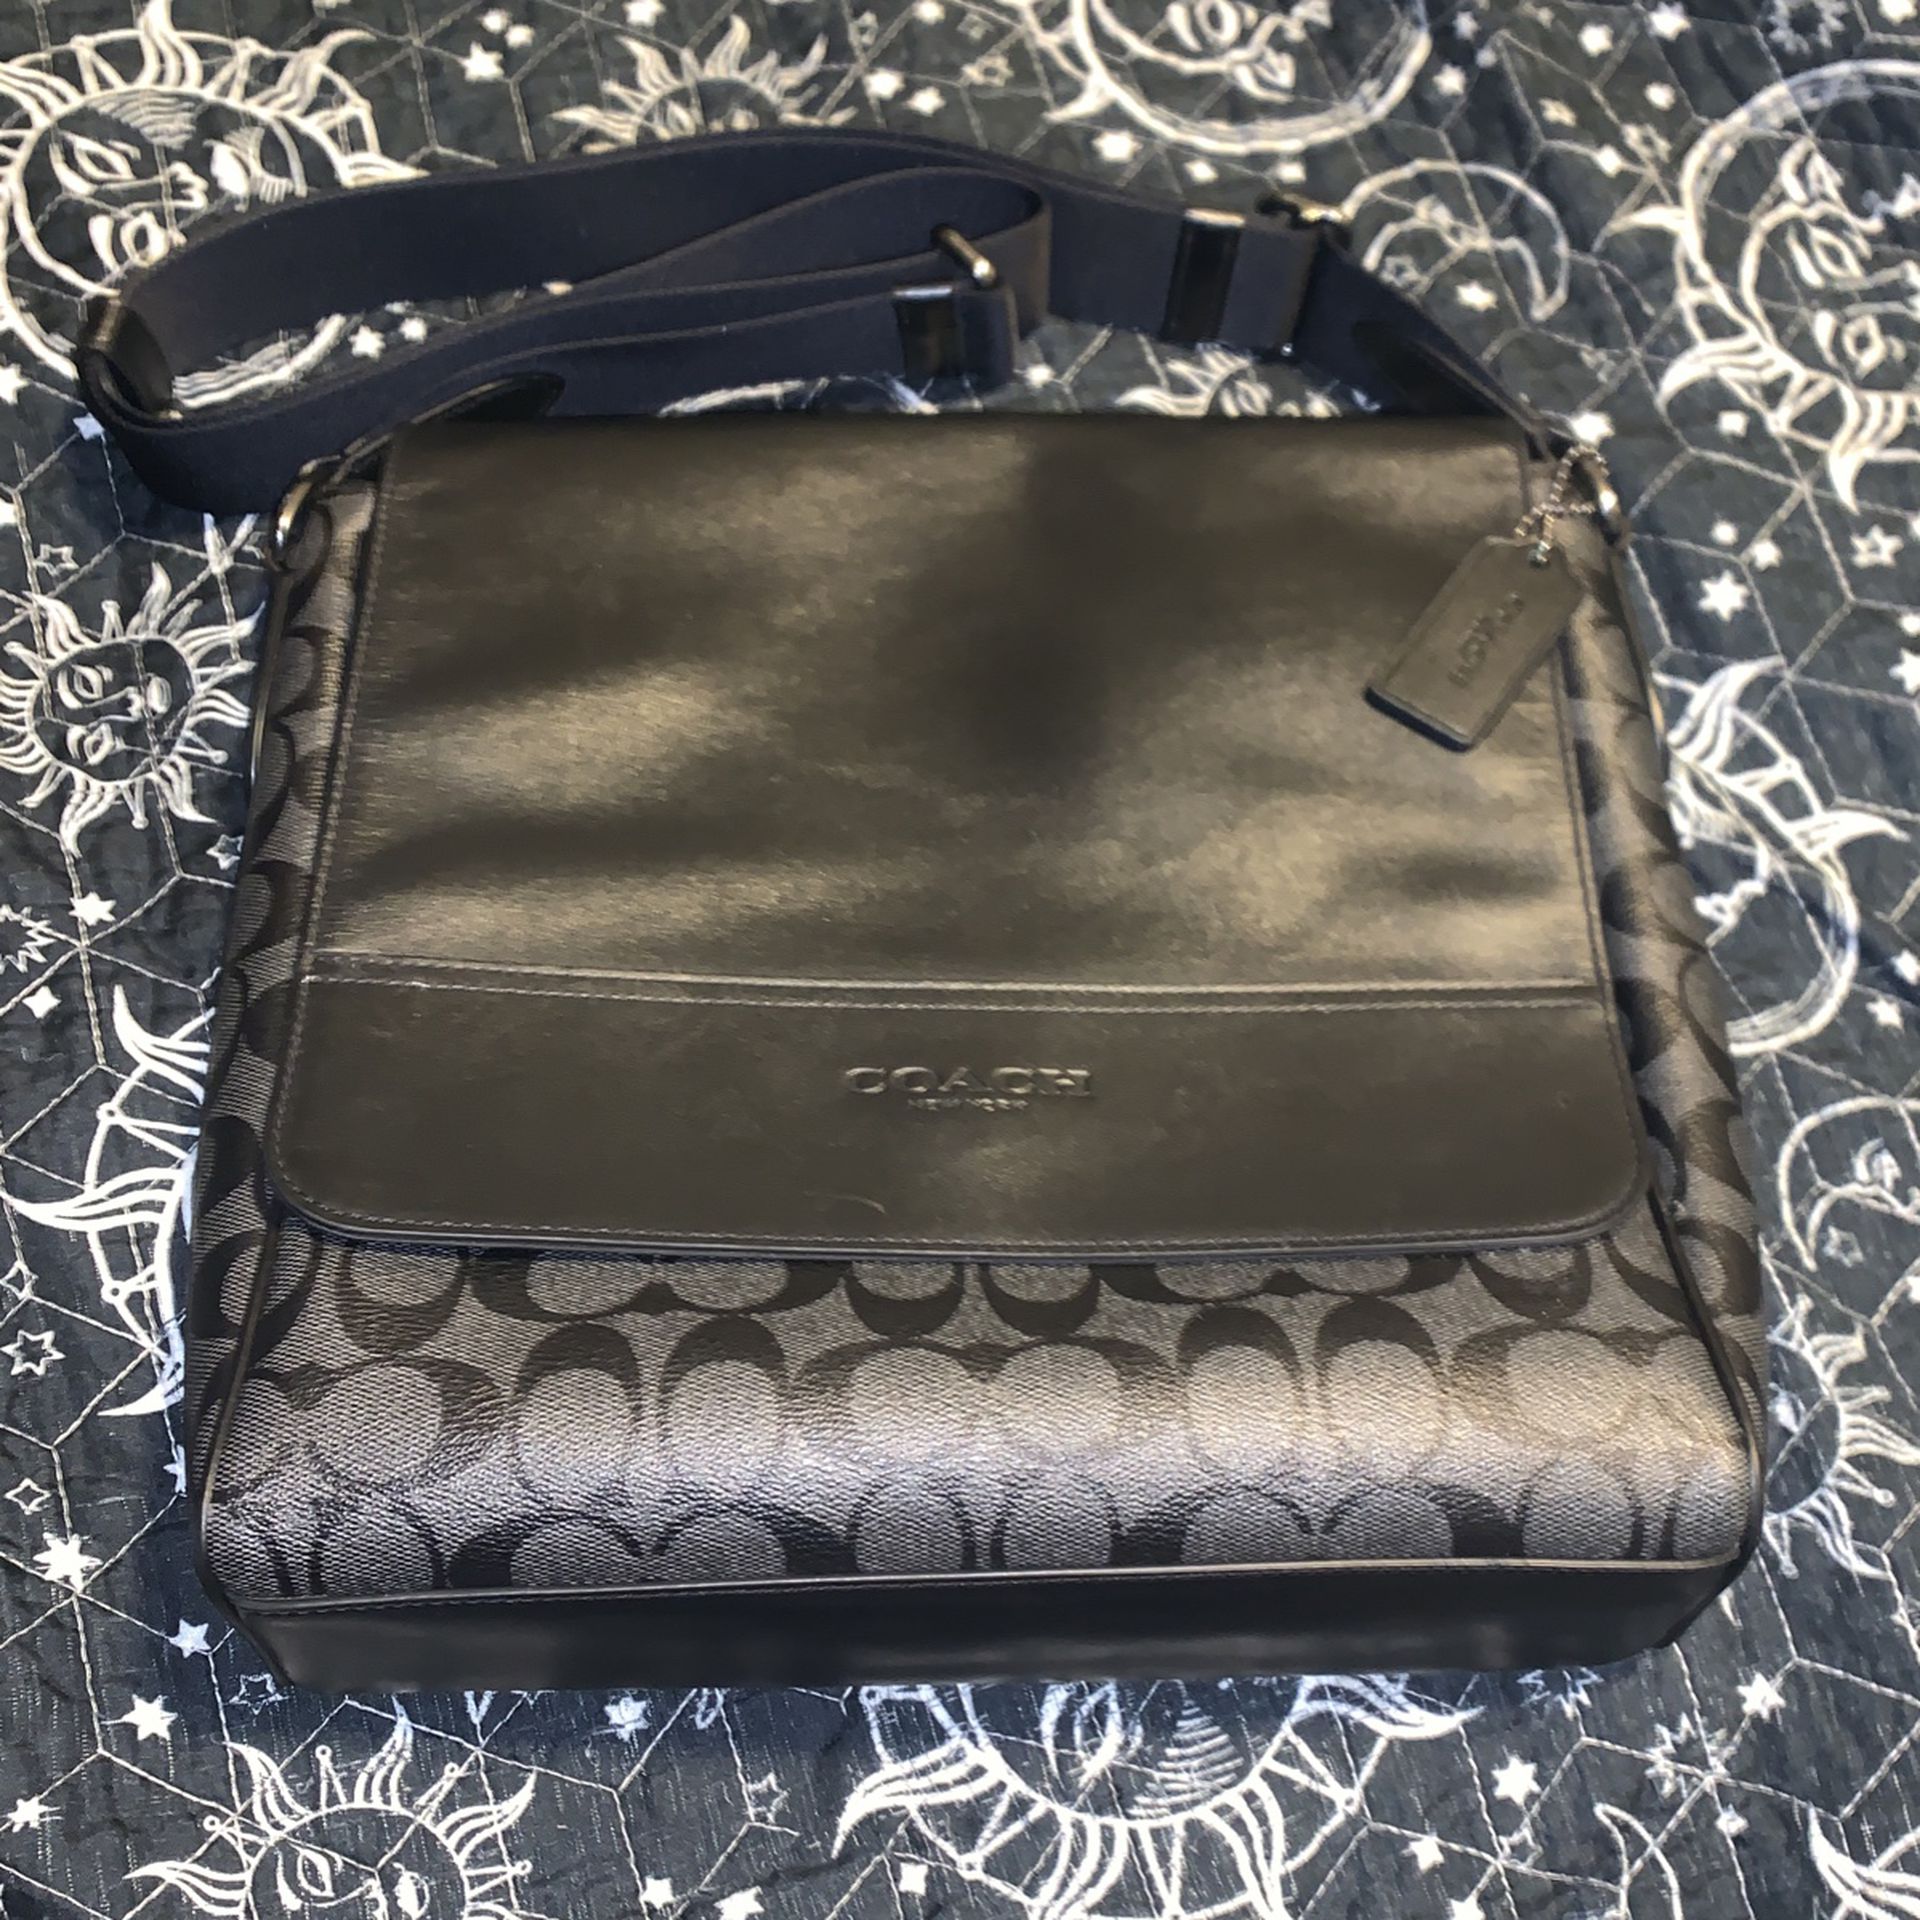 Think Royln Handbag for Sale in Chicago, IL - OfferUp